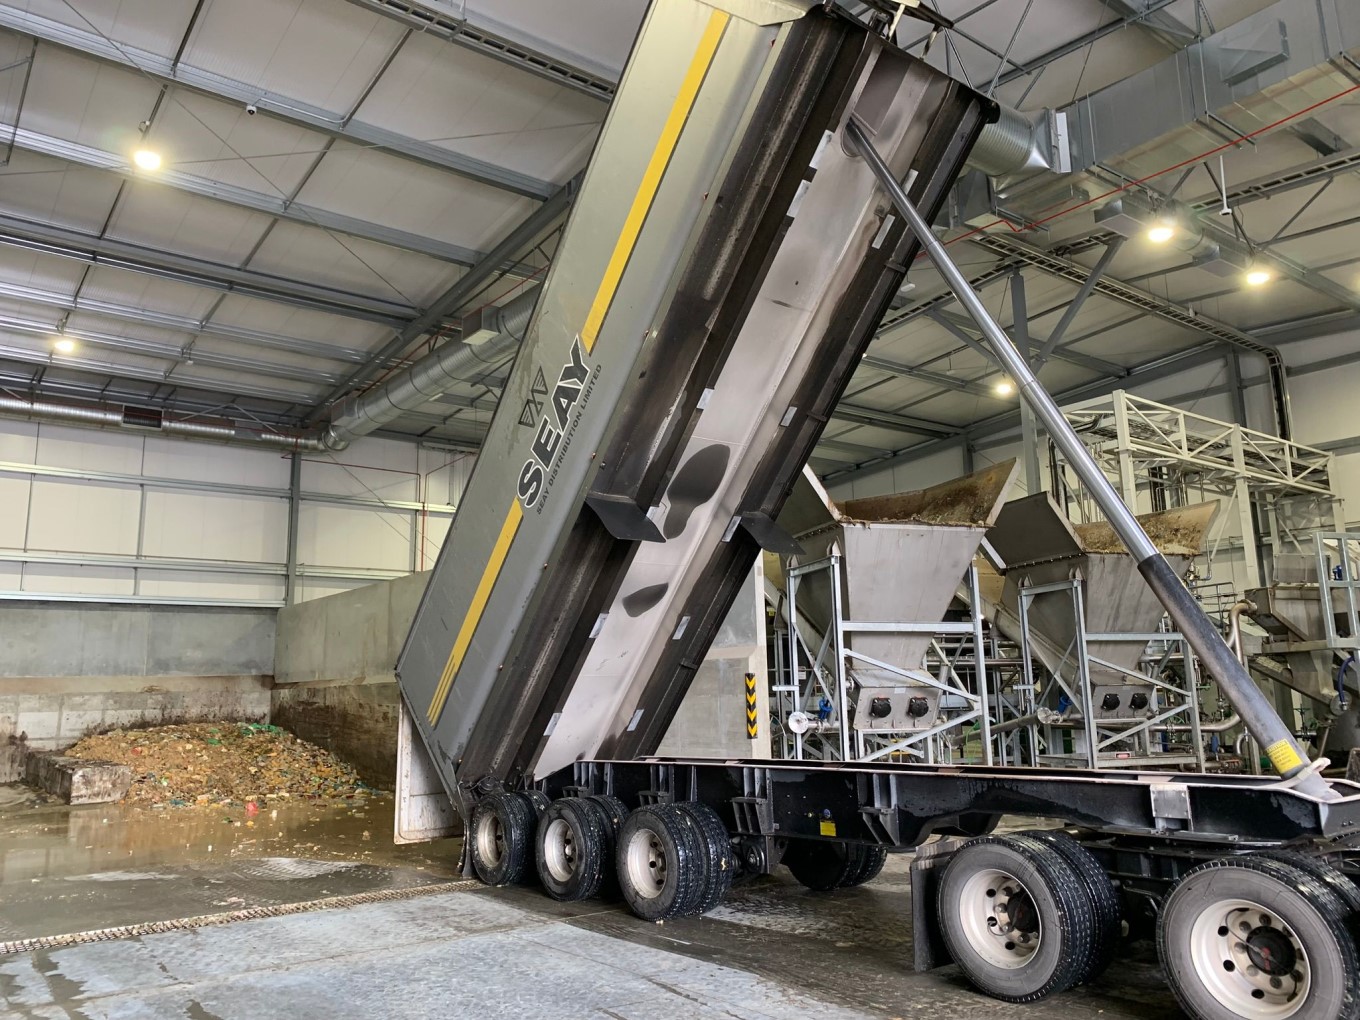 Food scraps are converted into biogas and liquid fertiliser at Ecogas’ organics processing facility in Reporoa.